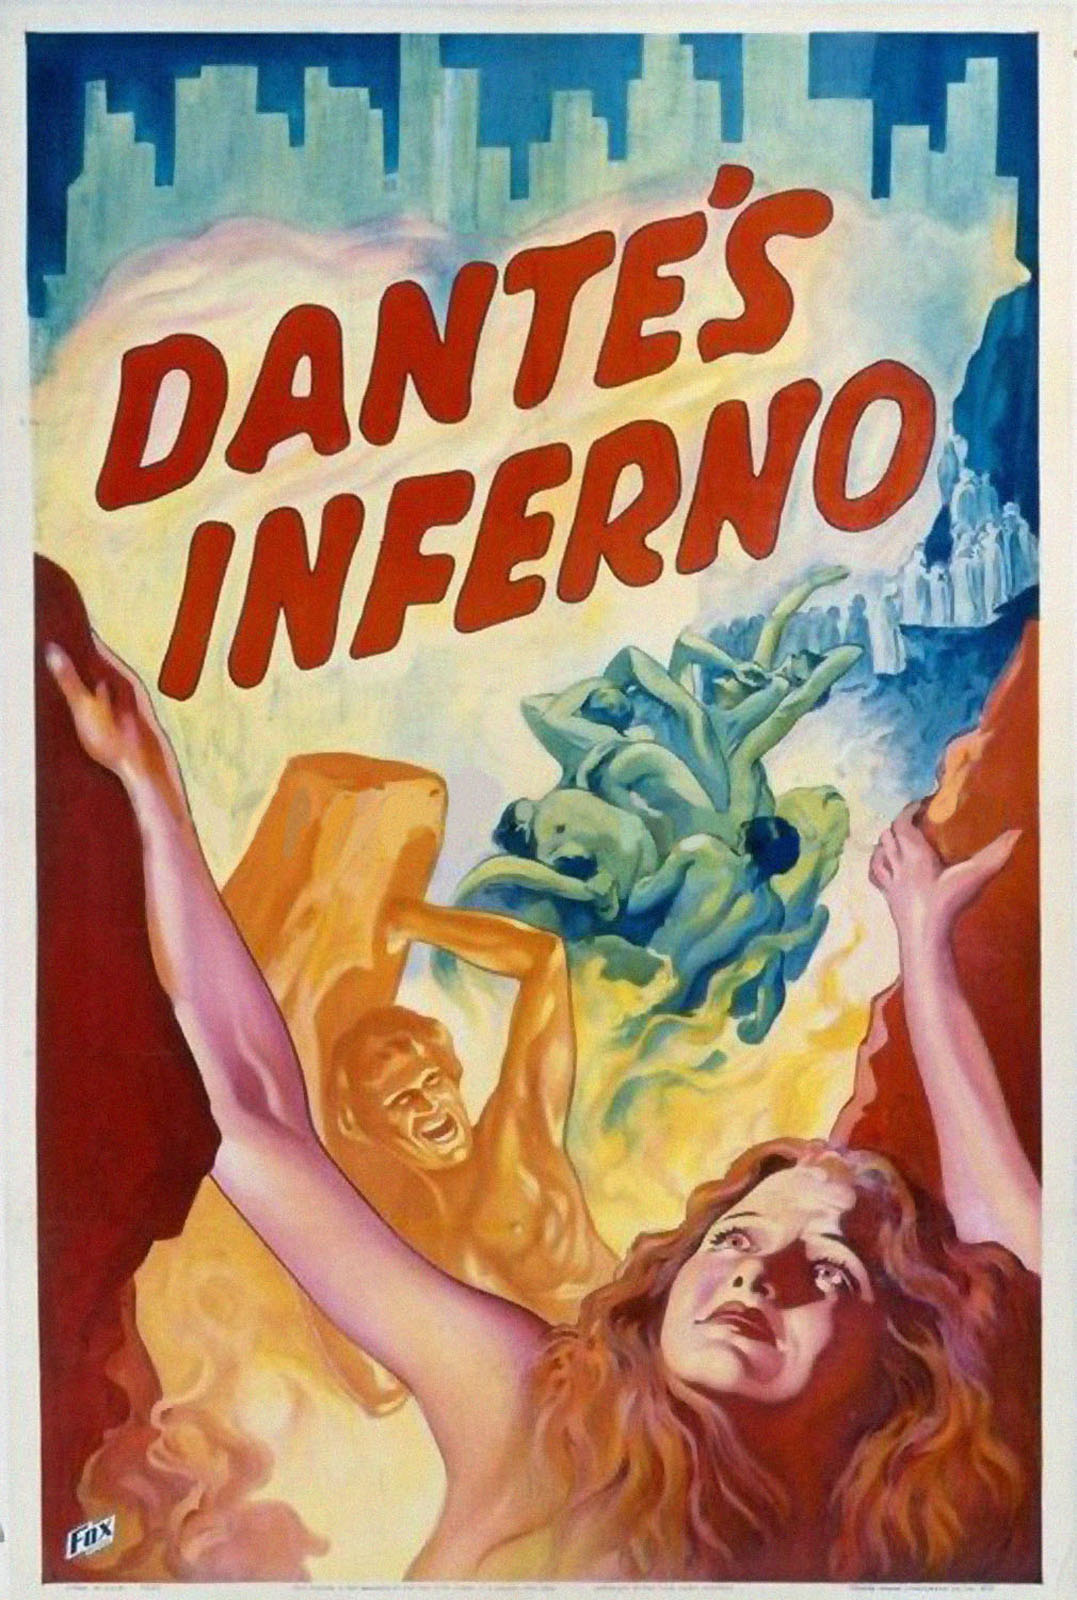 DVD Review – Dante's Inferno